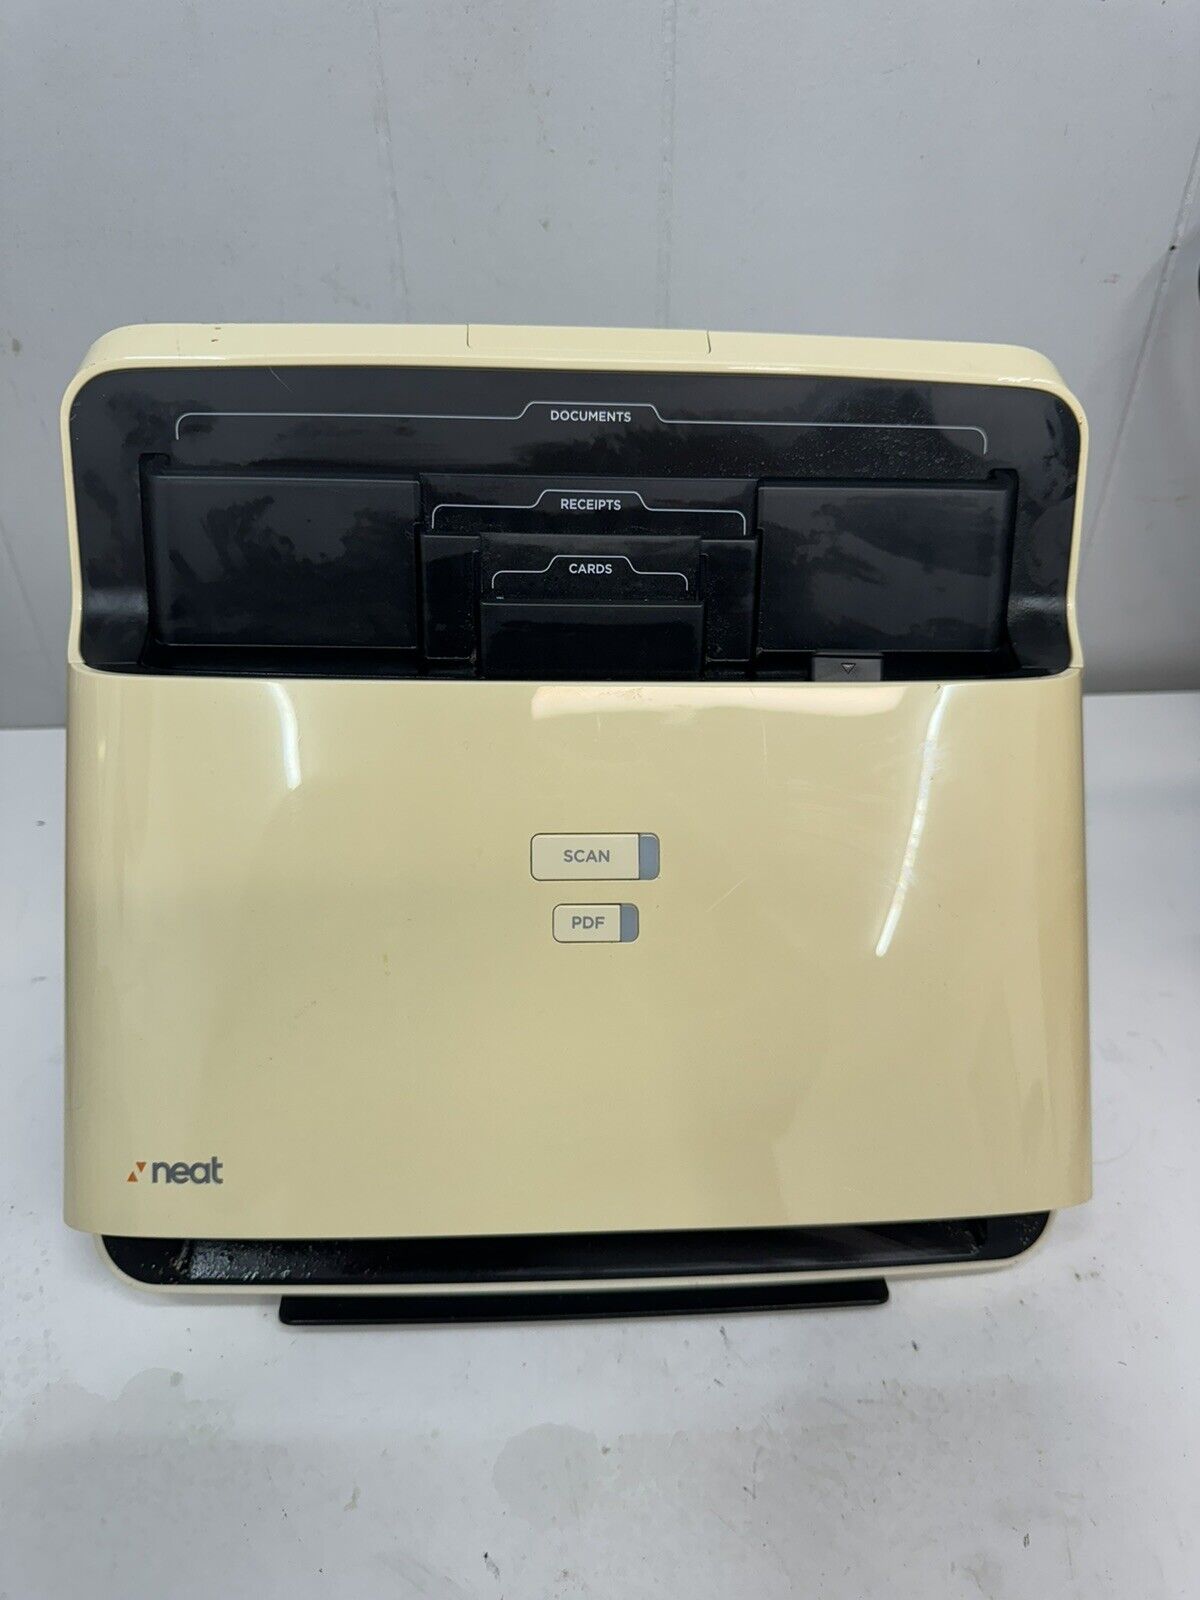 Neat Desk Document Receipt Card Scanner Digital Filing System ND-1000 Working 